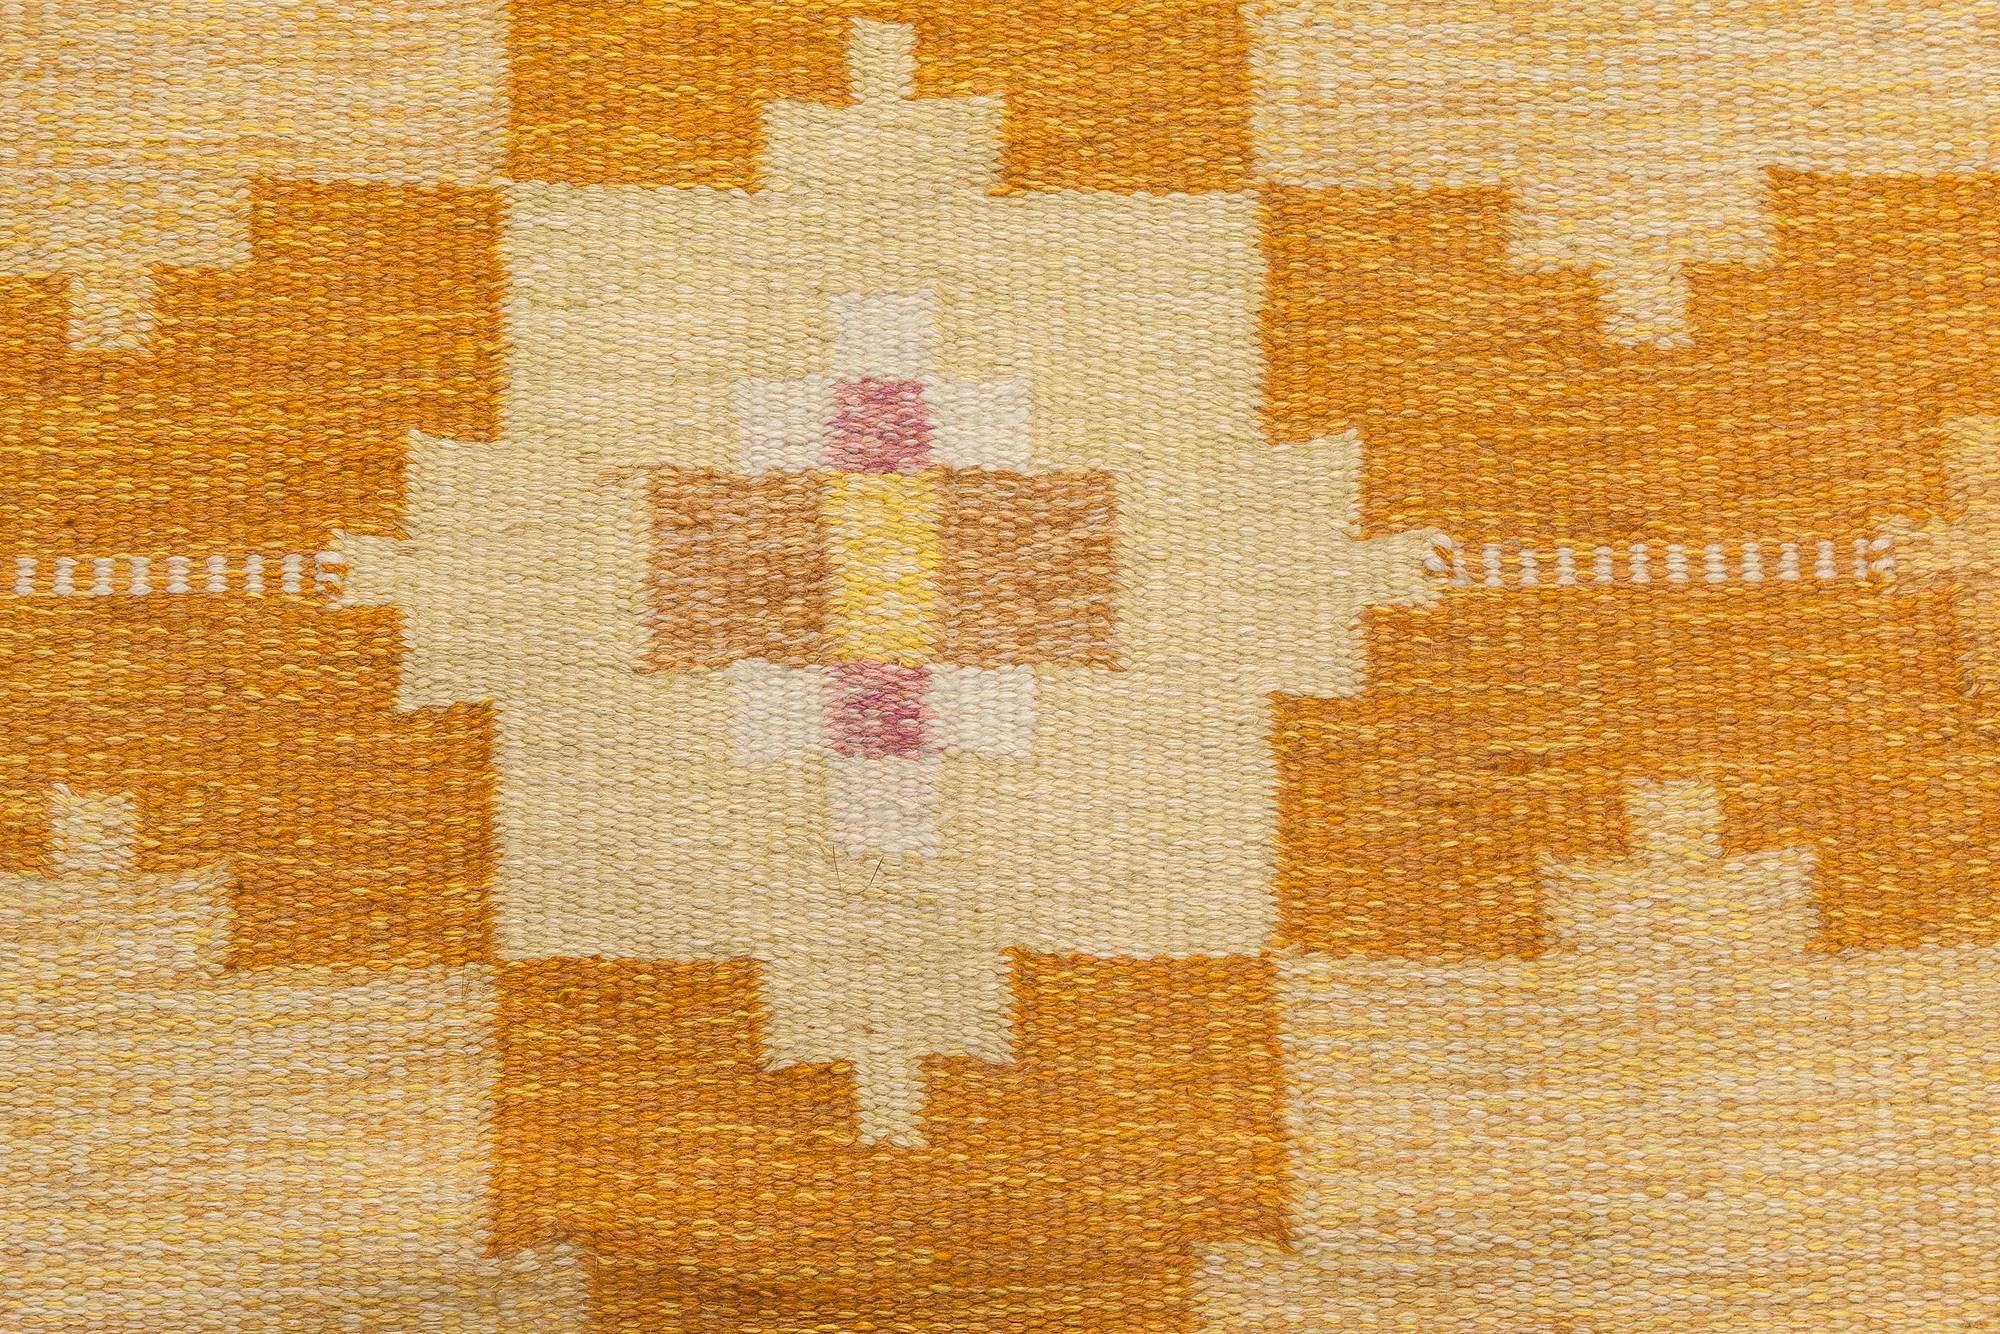 Mid-20th century Swedish Geometric Yellow Flat-weave Wool Rug by Ingegerd Silow
Size: 5'6